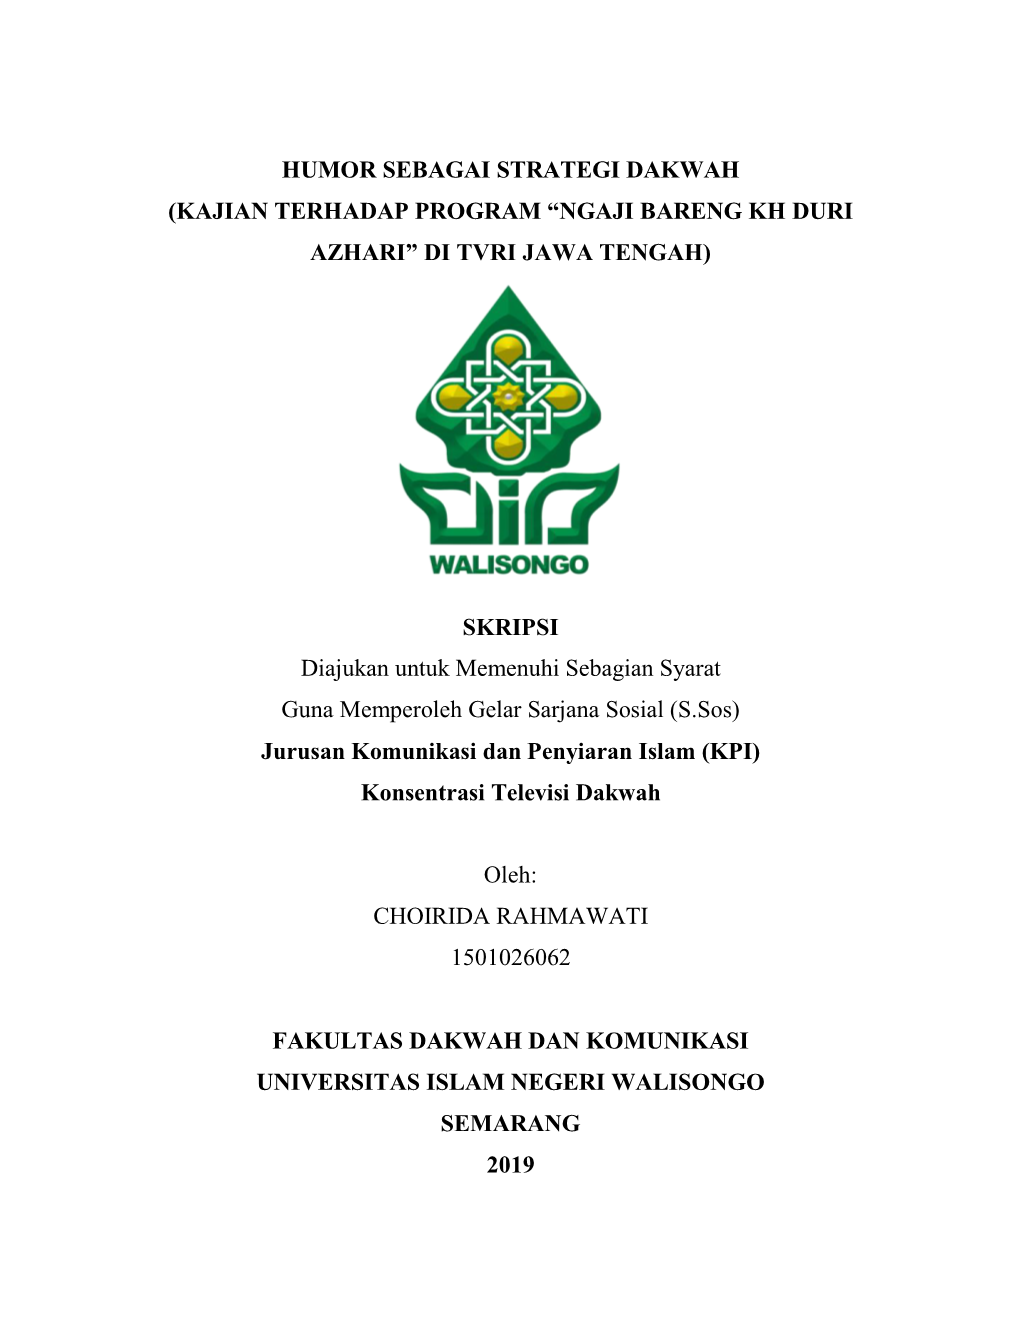 Kajian Terhadap Program “Ngaji Bareng Kh Duri Azhari” Di Tvri Jawa Tengah